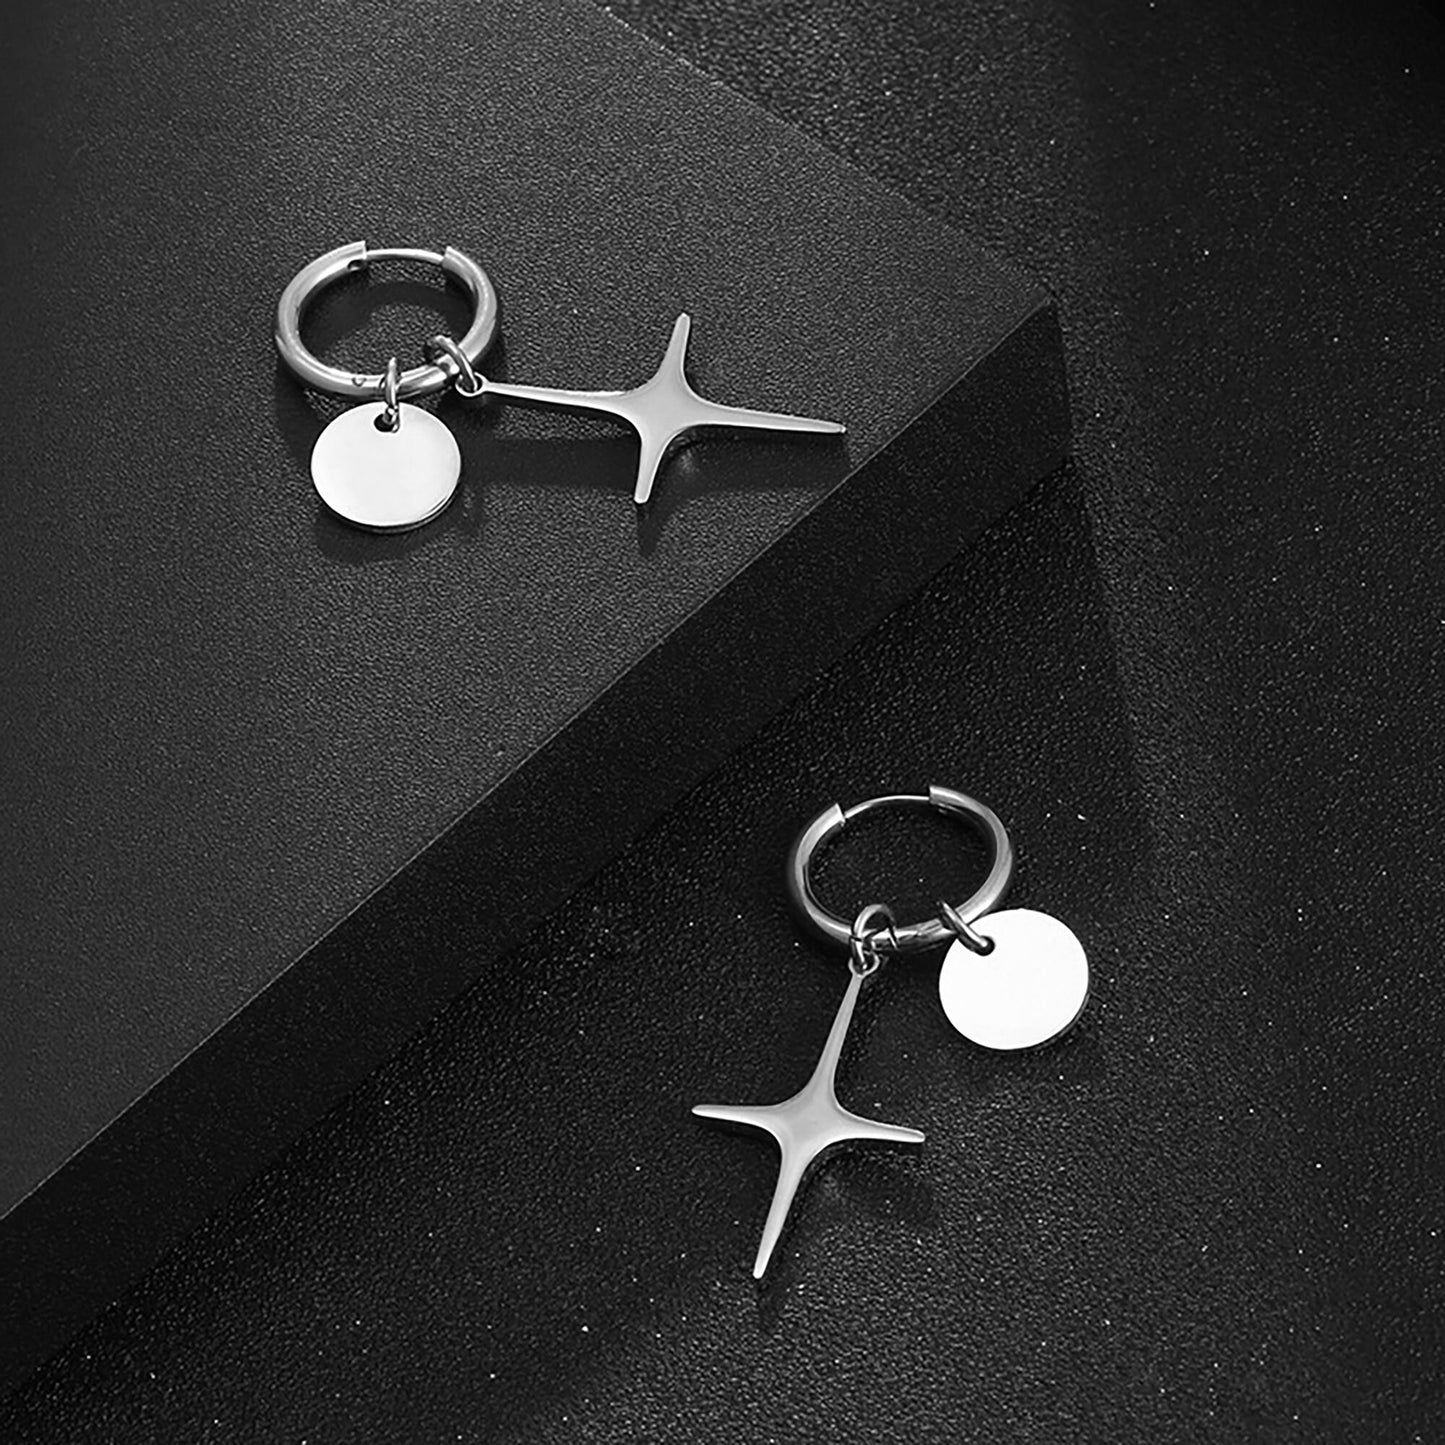 Titanium Sparkling Star Hoop Earrings, Non Tarnish Earrings, Implant Grade Titanium Waterproof Earrings, Vintage Style, Minimal